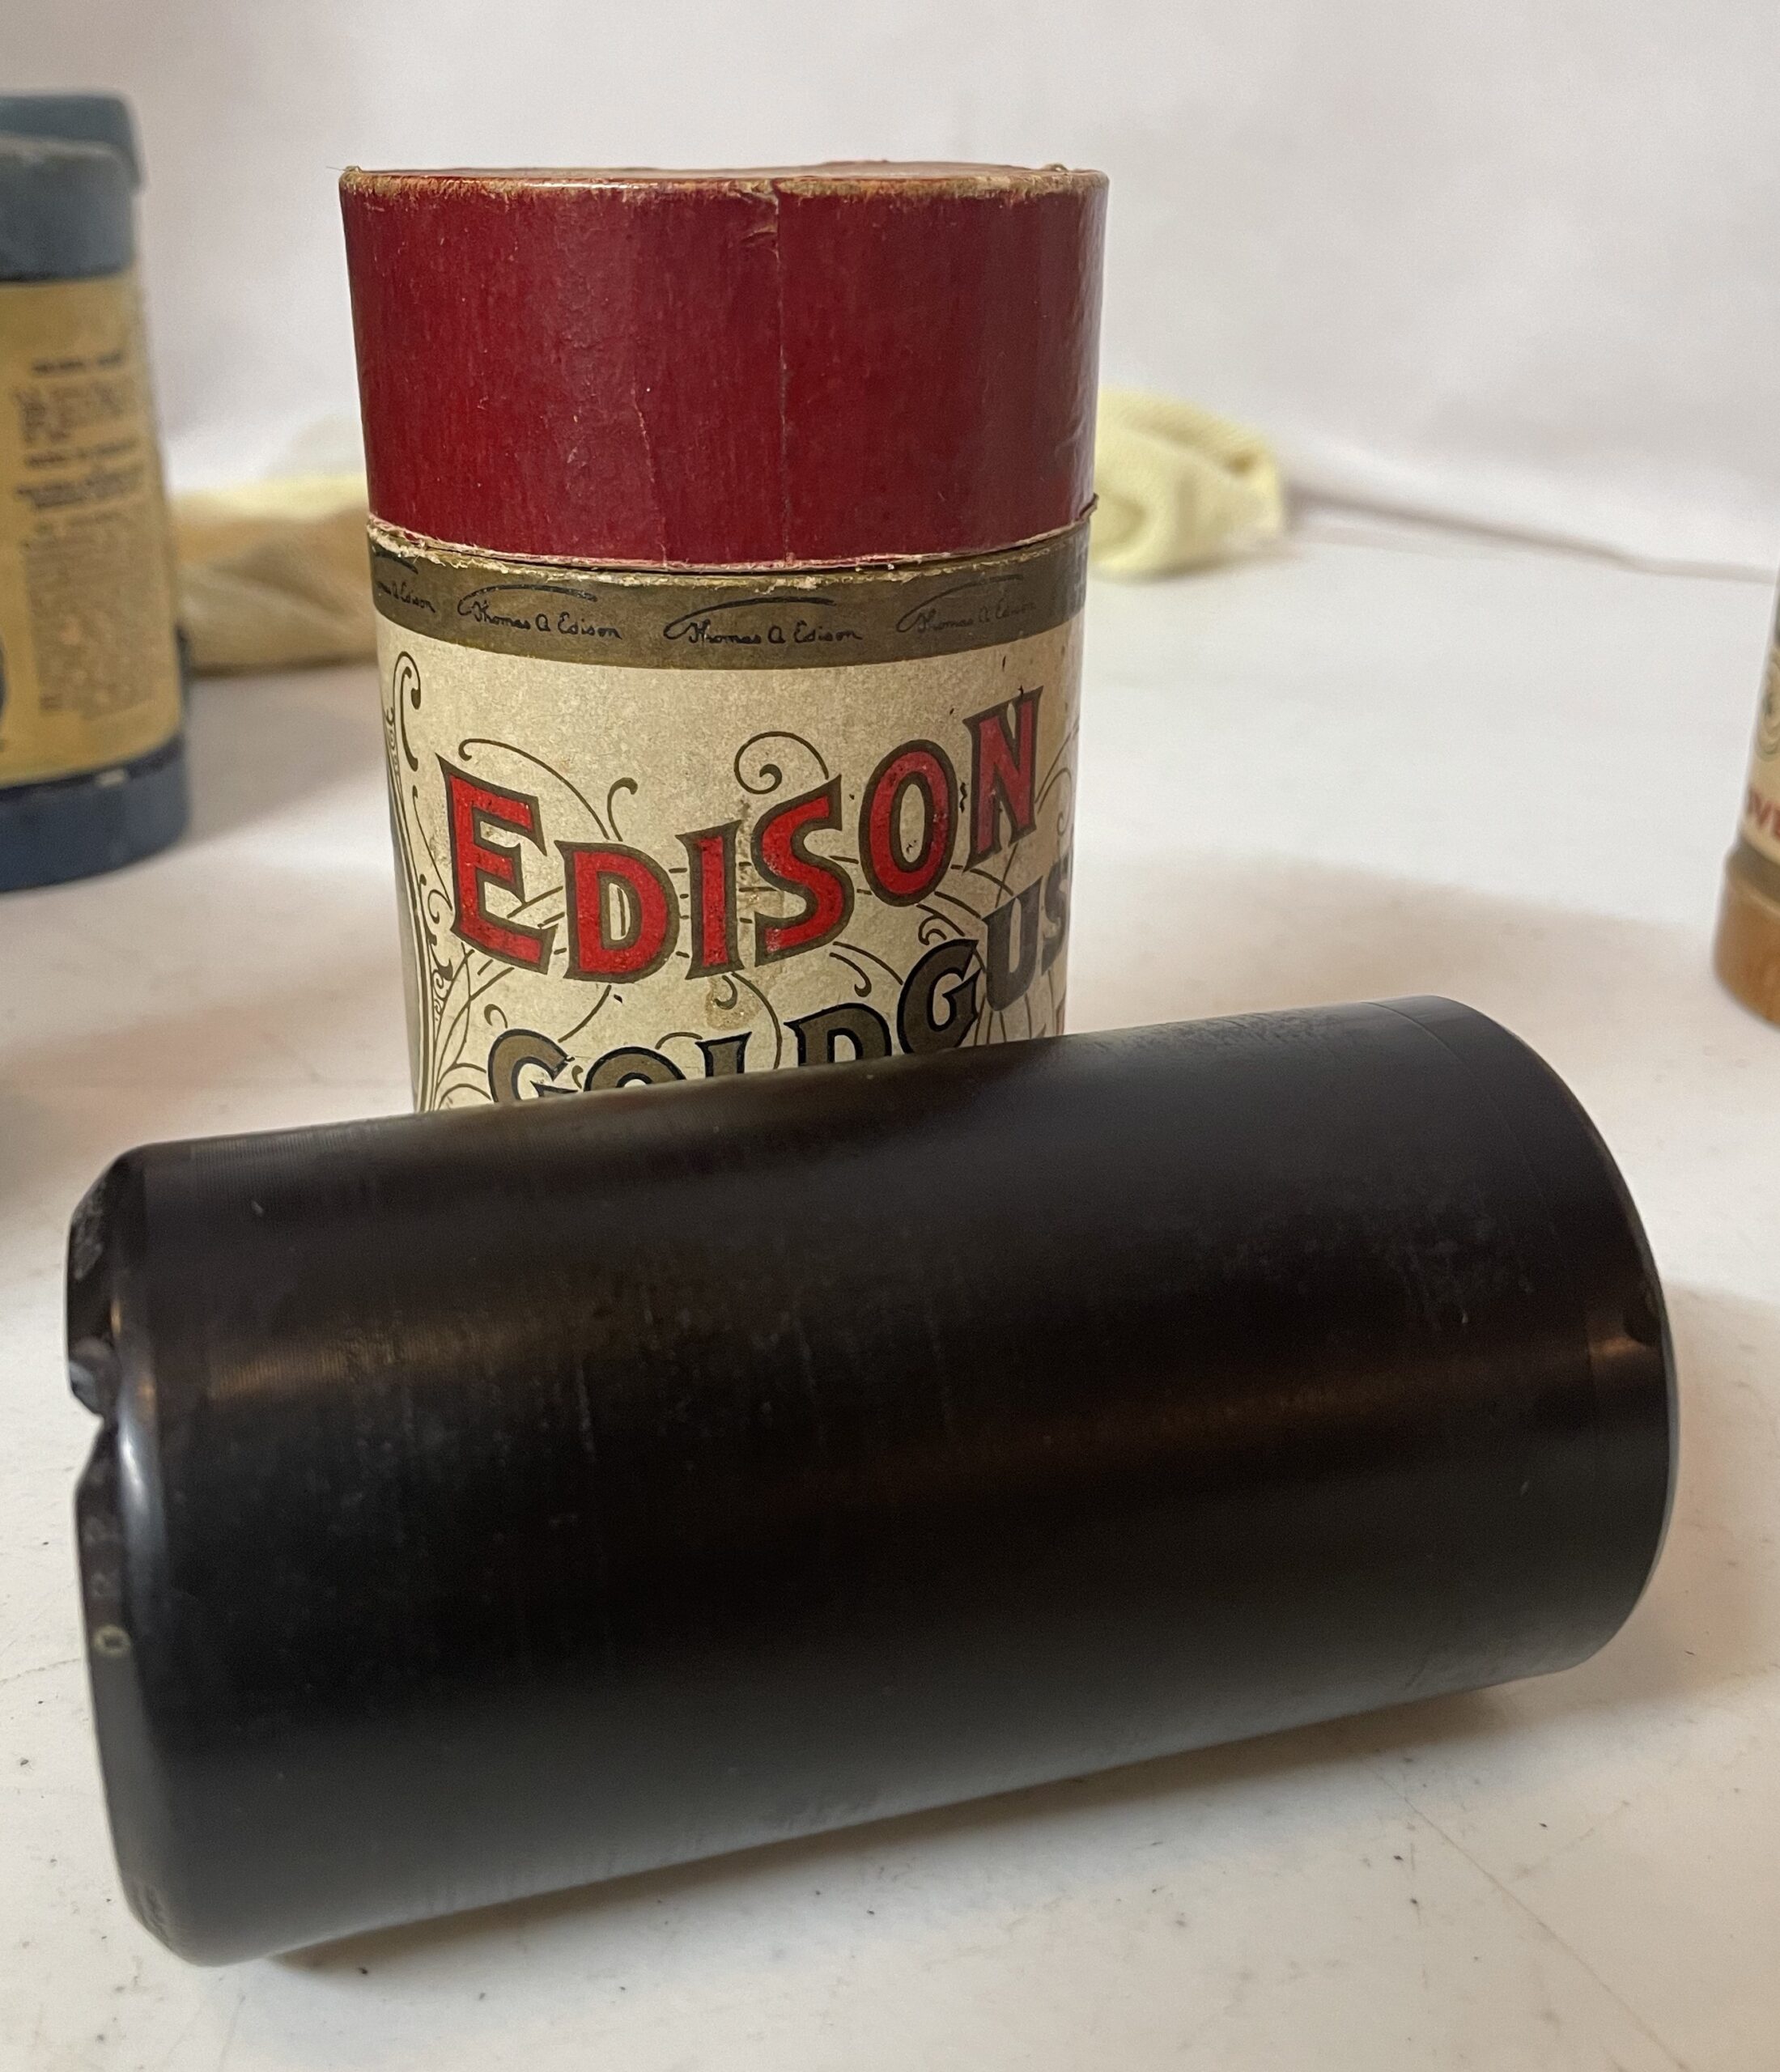 Edison 4 min. Cylinder… “Aria ur Regementets Dotter” (Daughter of the Regiment.) (Italian Opera…RARE)